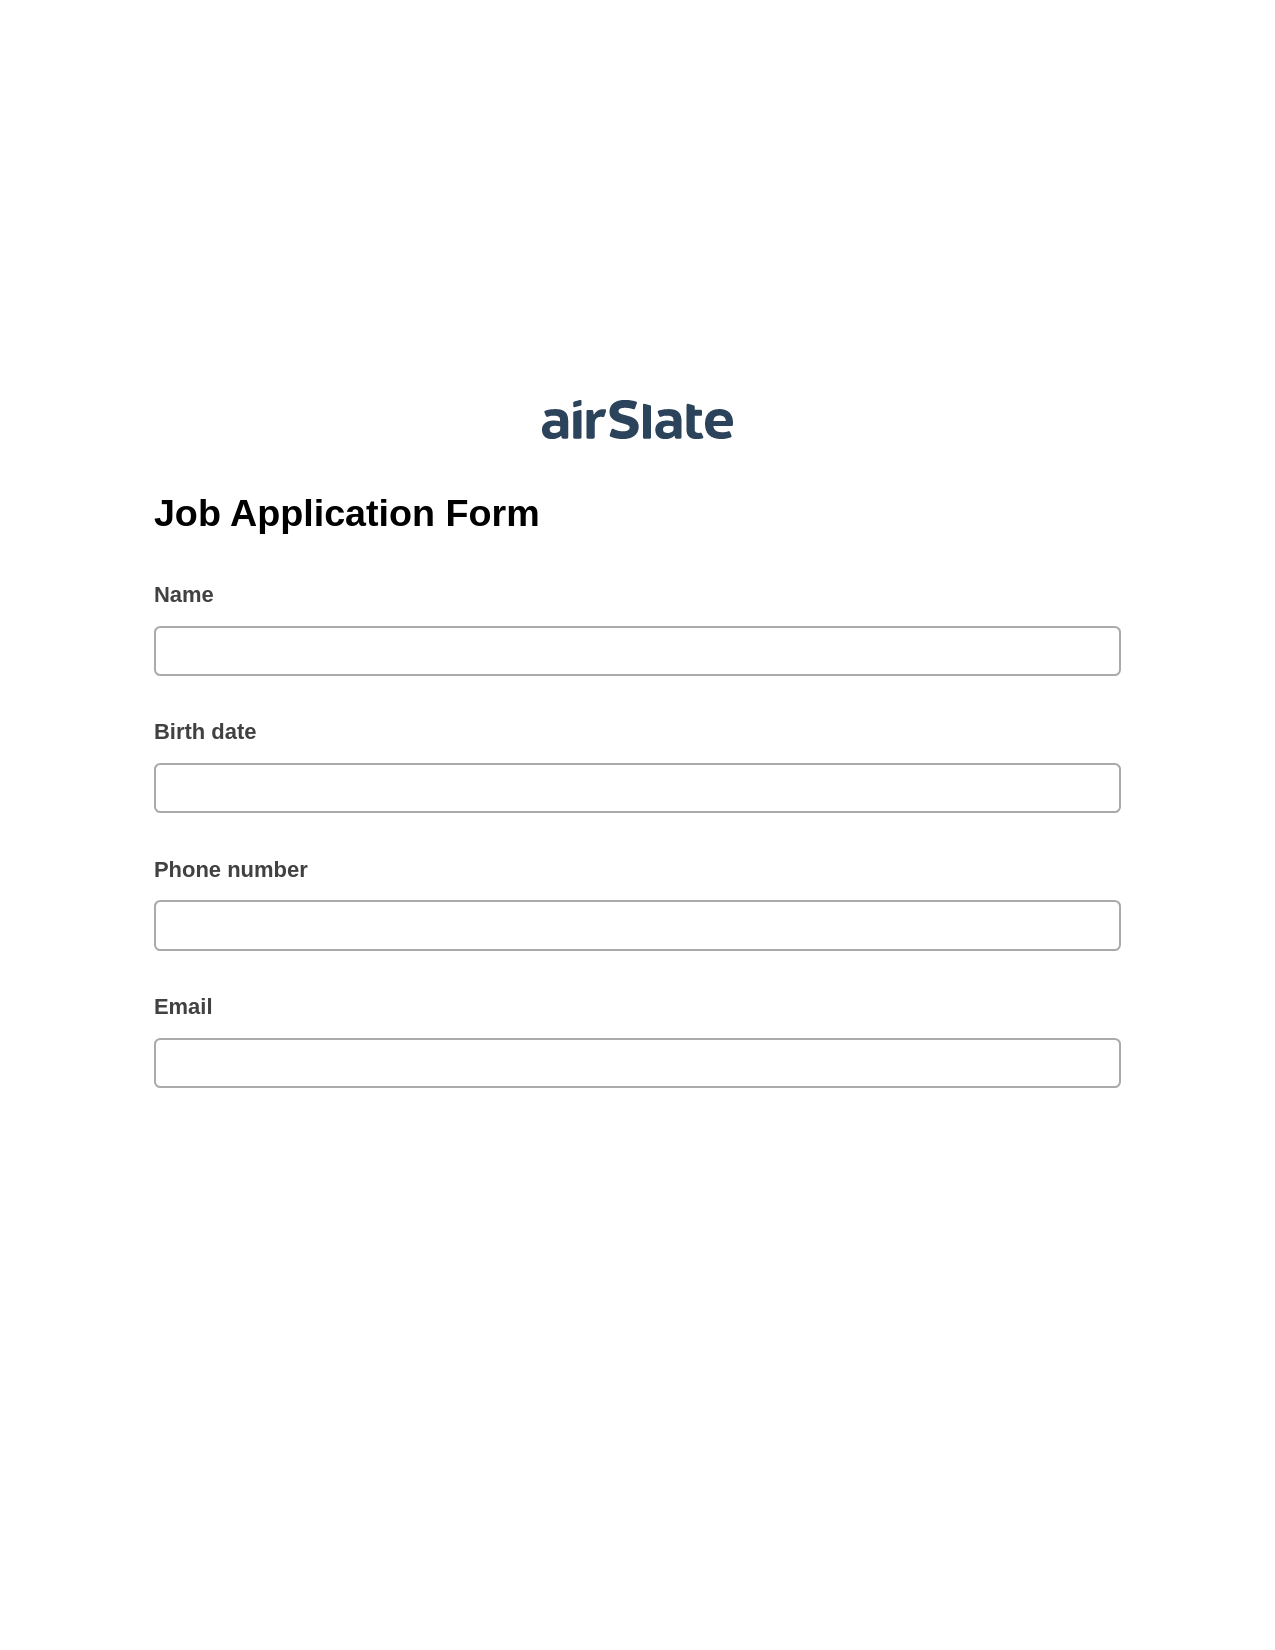 Multirole Job Application Form Pre-fill from Excel Spreadsheet Dropdown Options Bot, Create slate bot, Box Bot